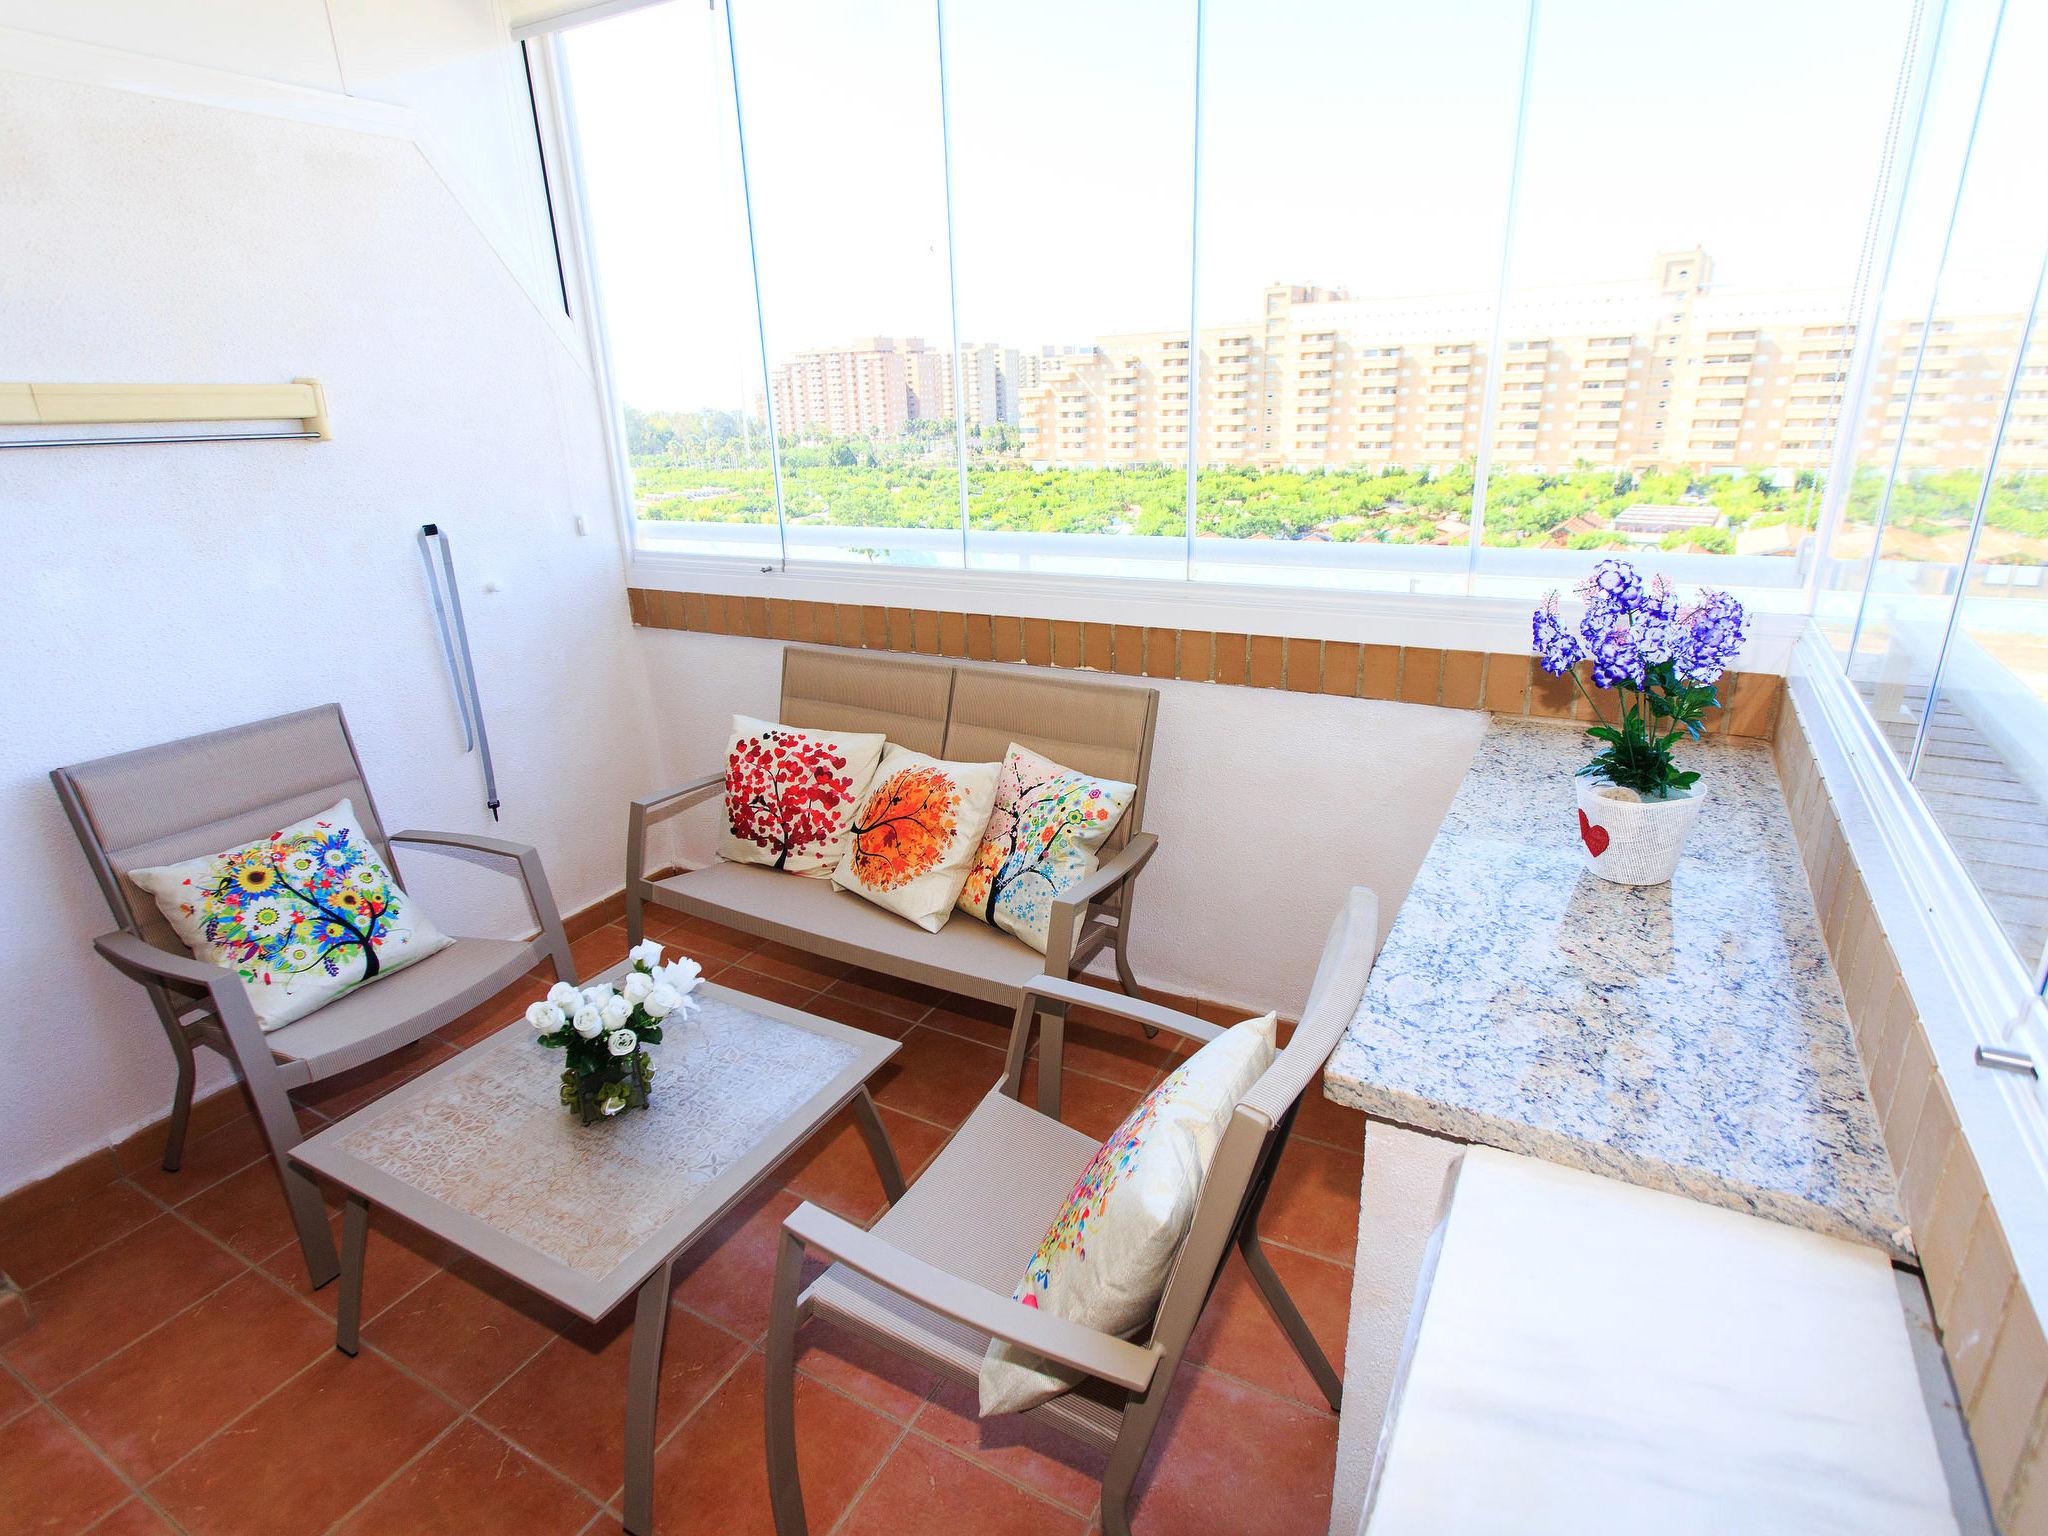 Photo 18 - Appartement de 2 chambres à Oropesa del Mar avec piscine et vues à la mer